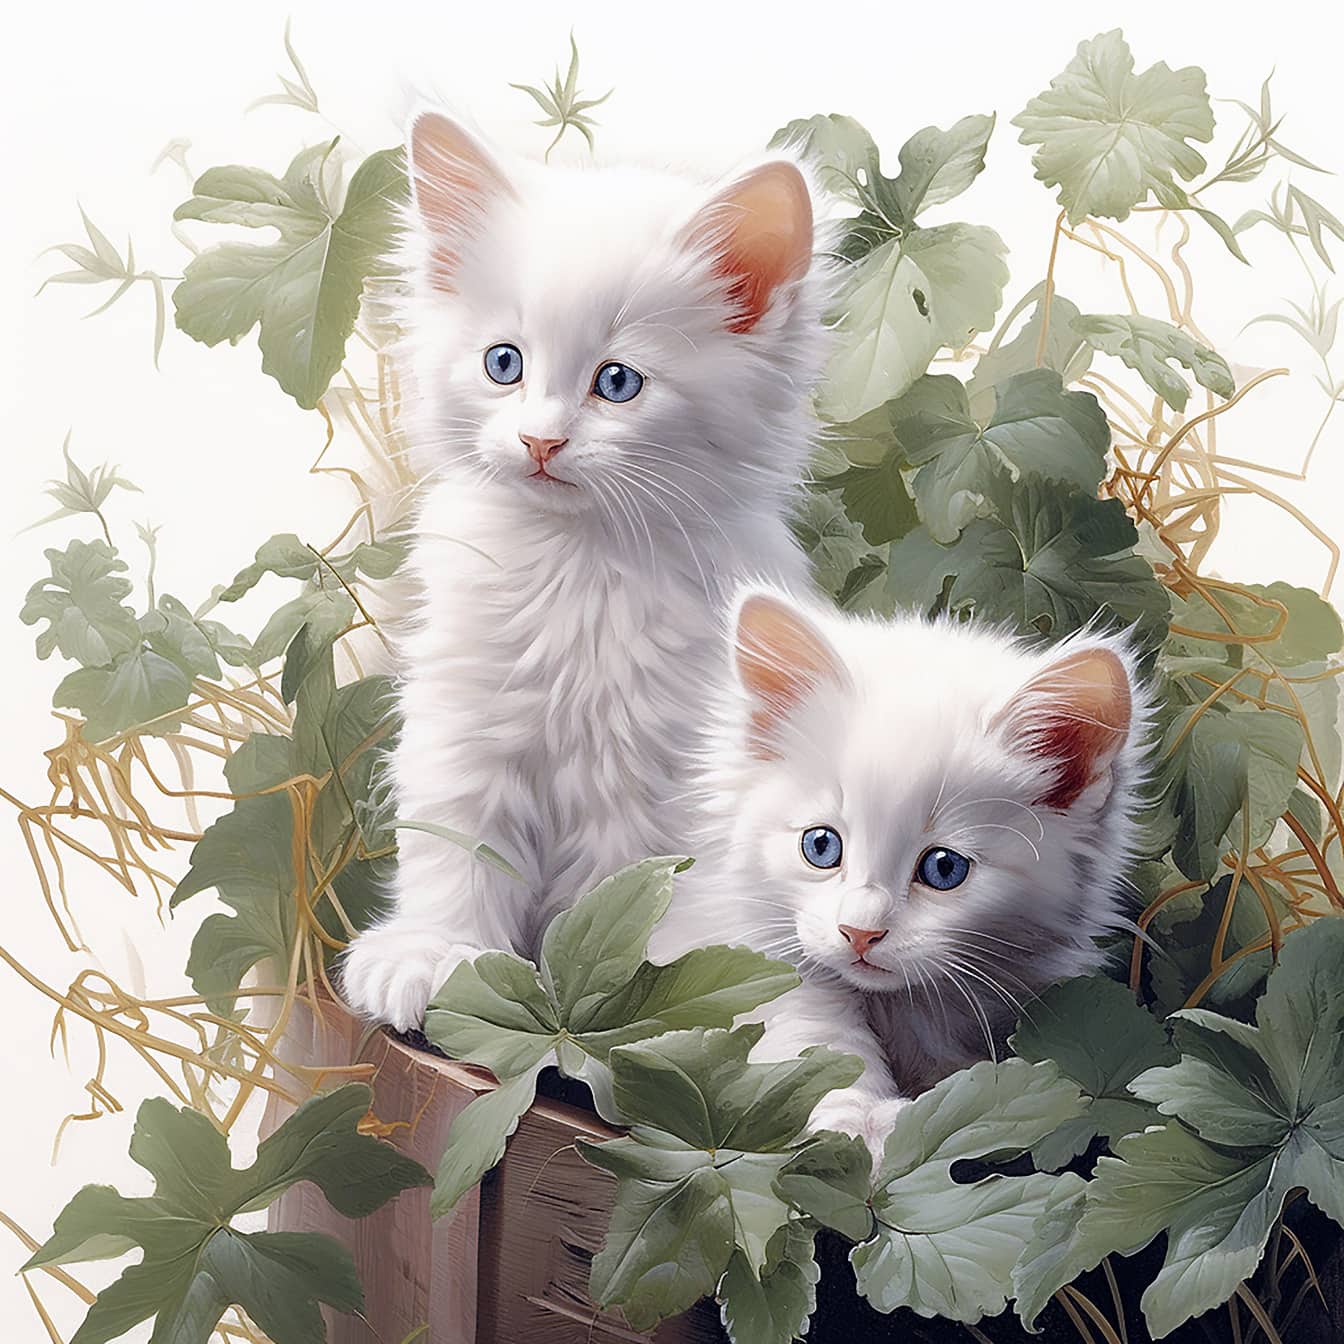 Anak kucing putih yang menggemaskan dengan karya seni digital mata biru